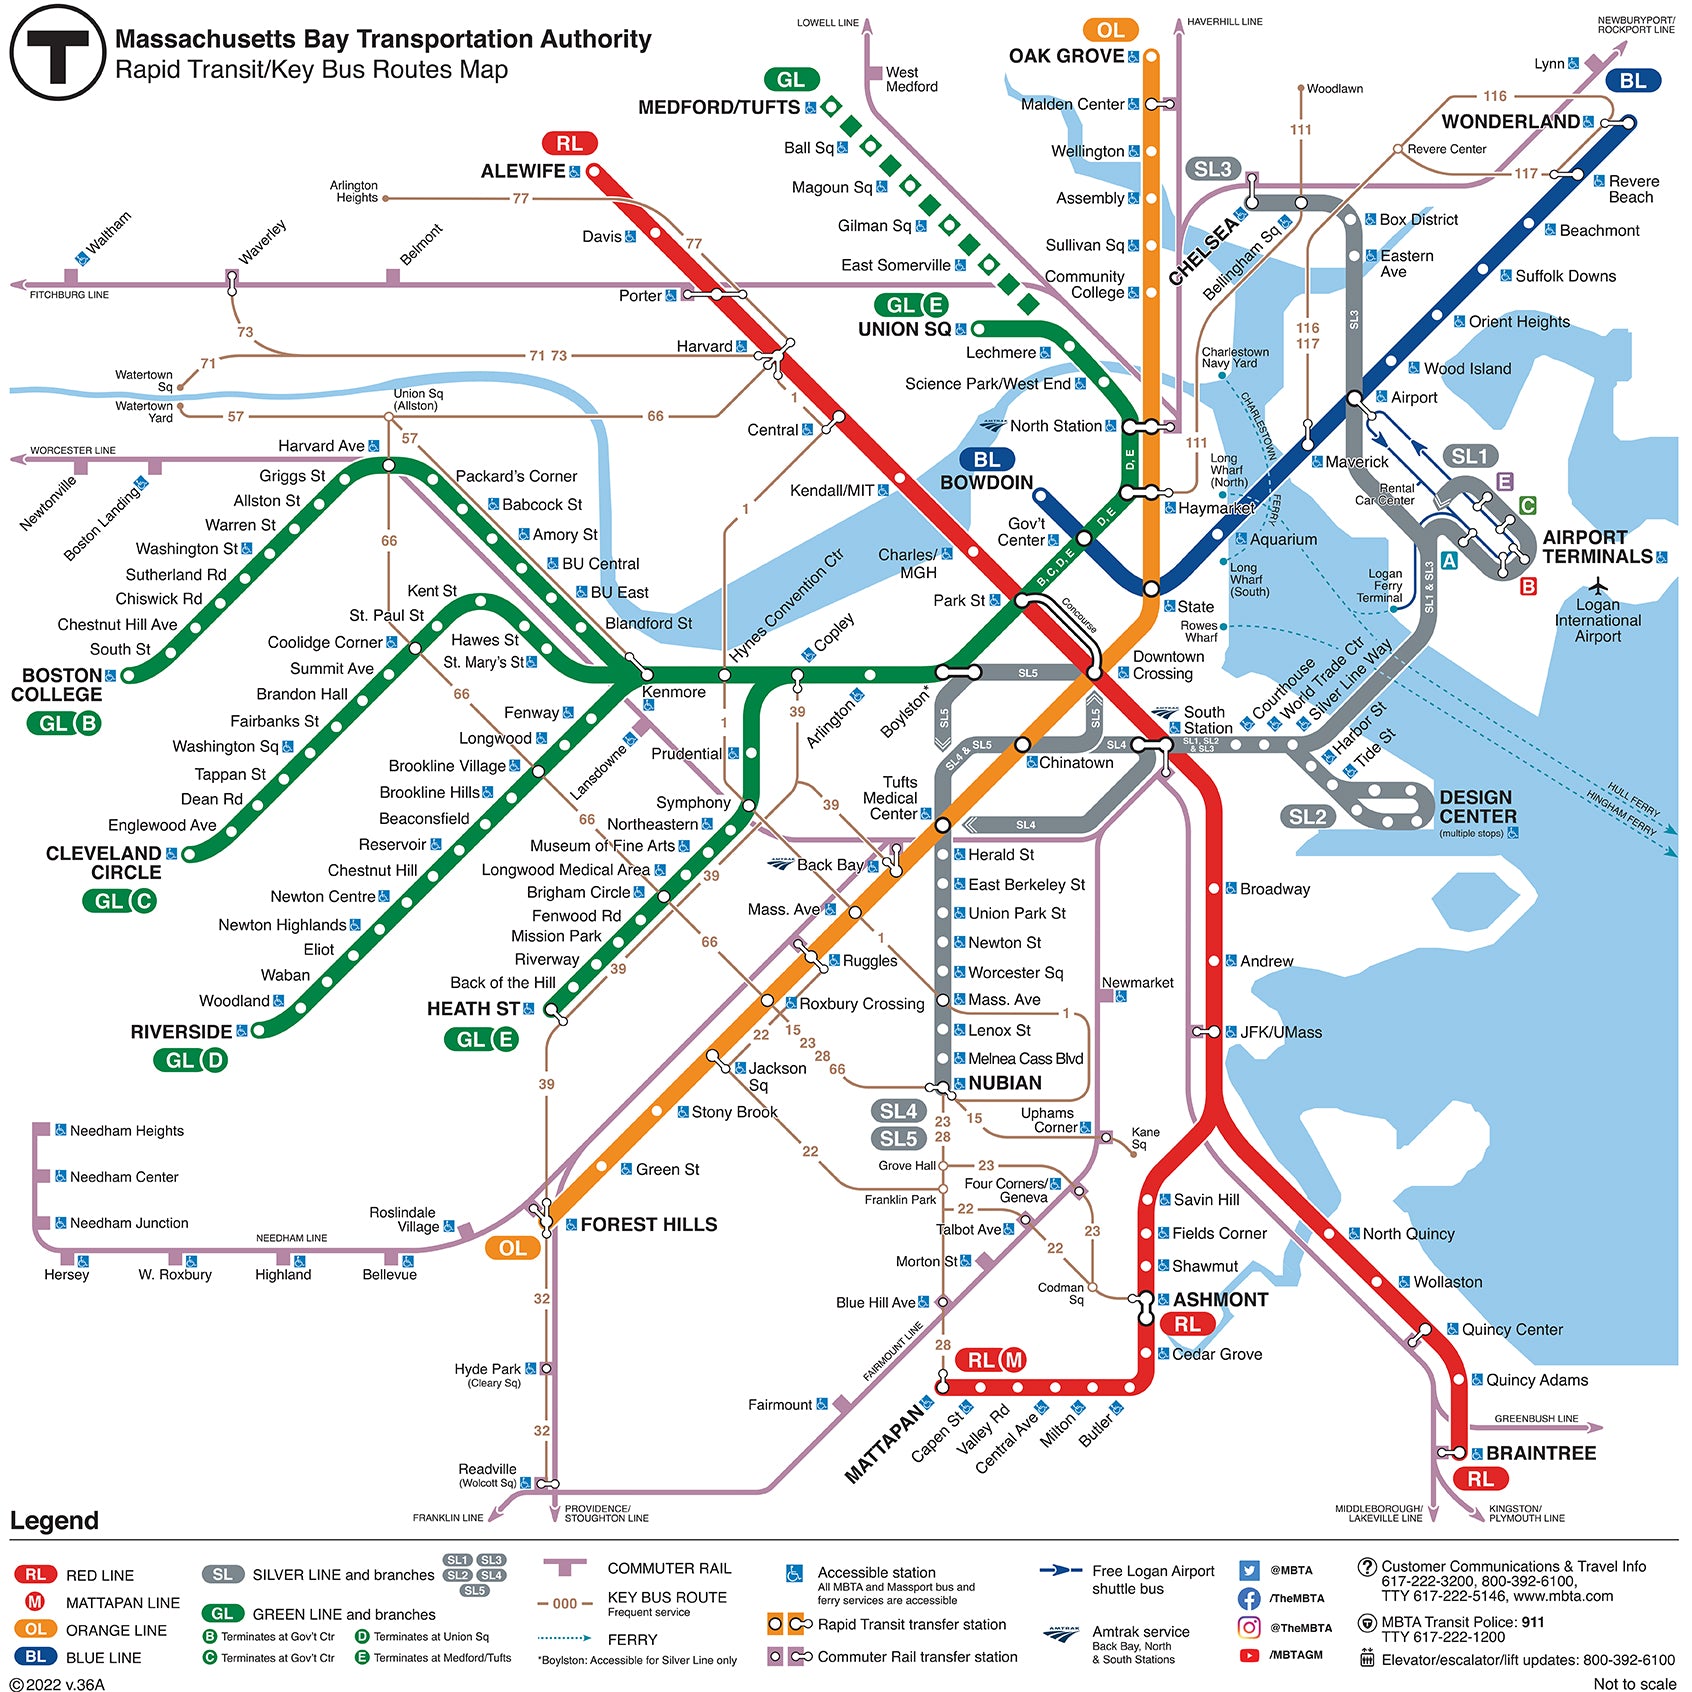 2022 MBTA Rapid Transit / Key Bus Routes Map (March 2022)